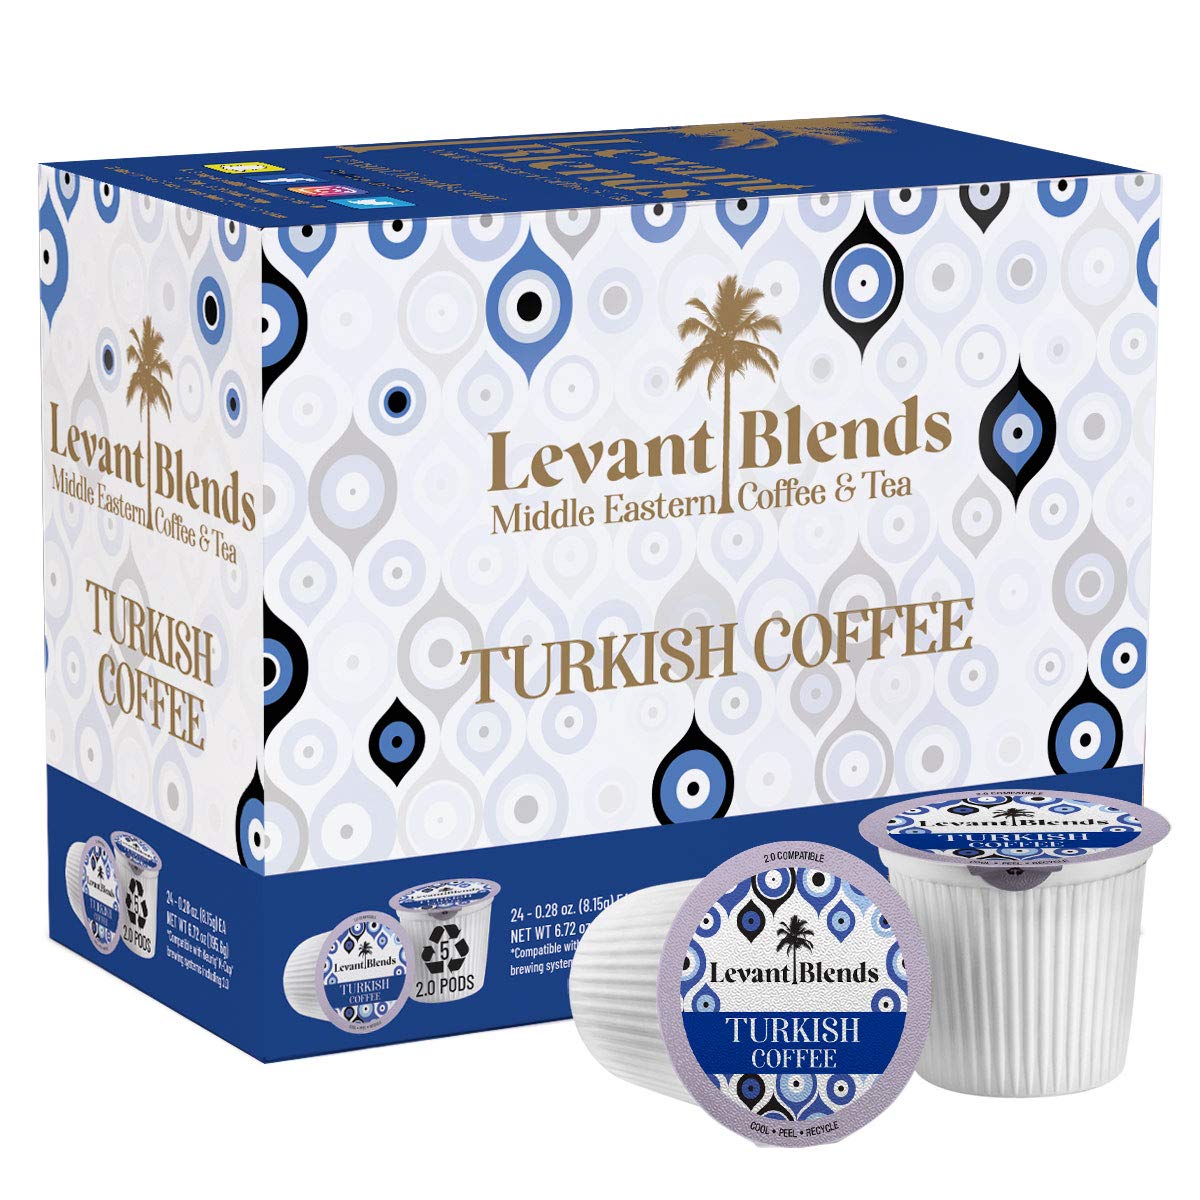 5. Levant Blends Turkish Coffee